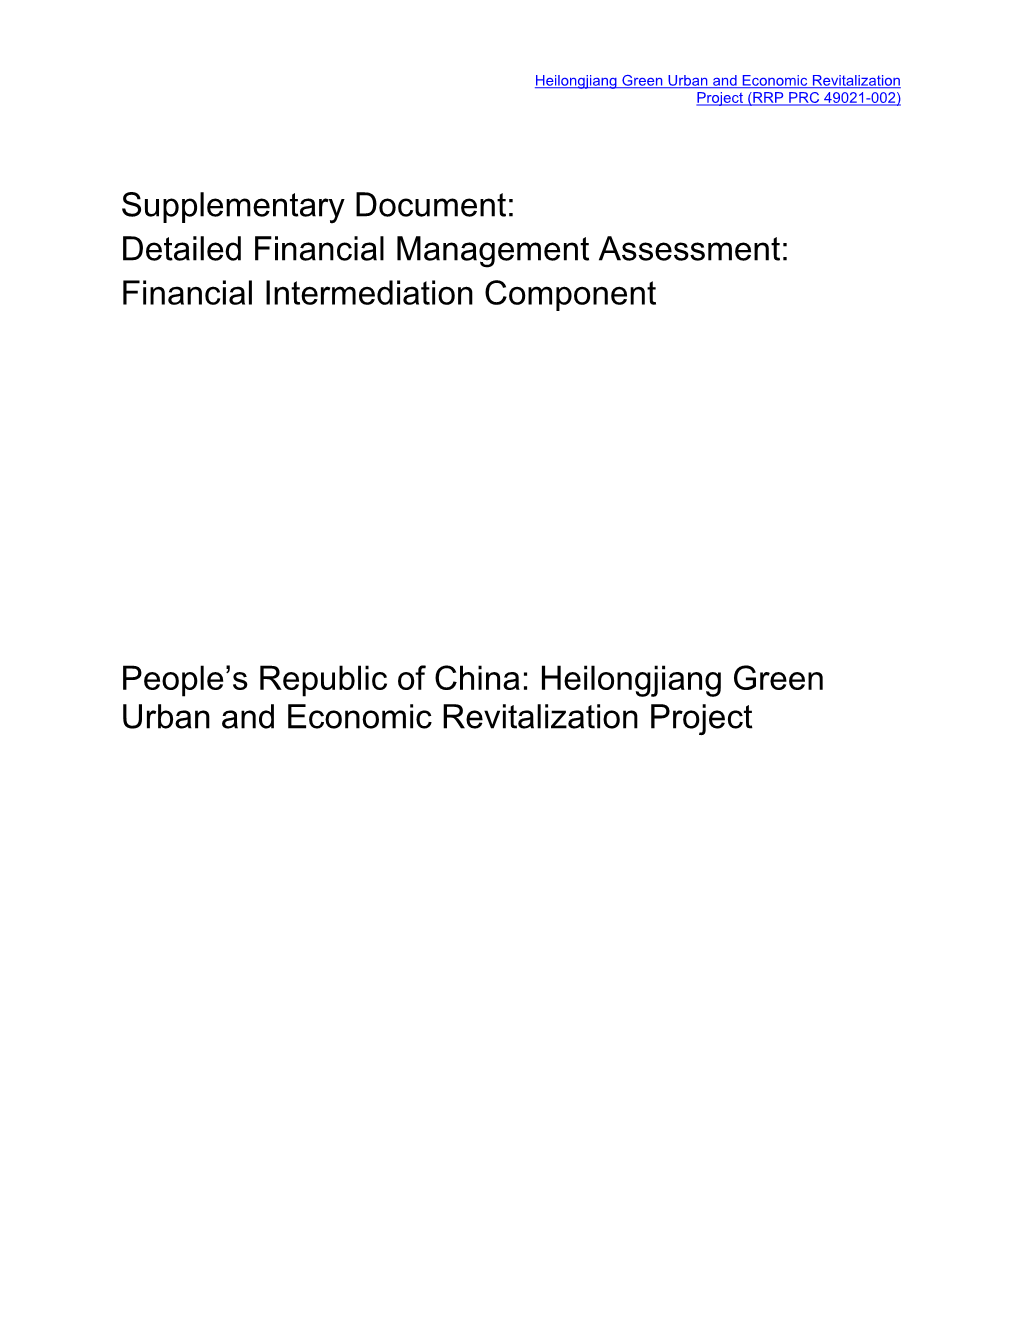 Supplementary Document: Detailed Financial Management Assessment: Financial Intermediation Component